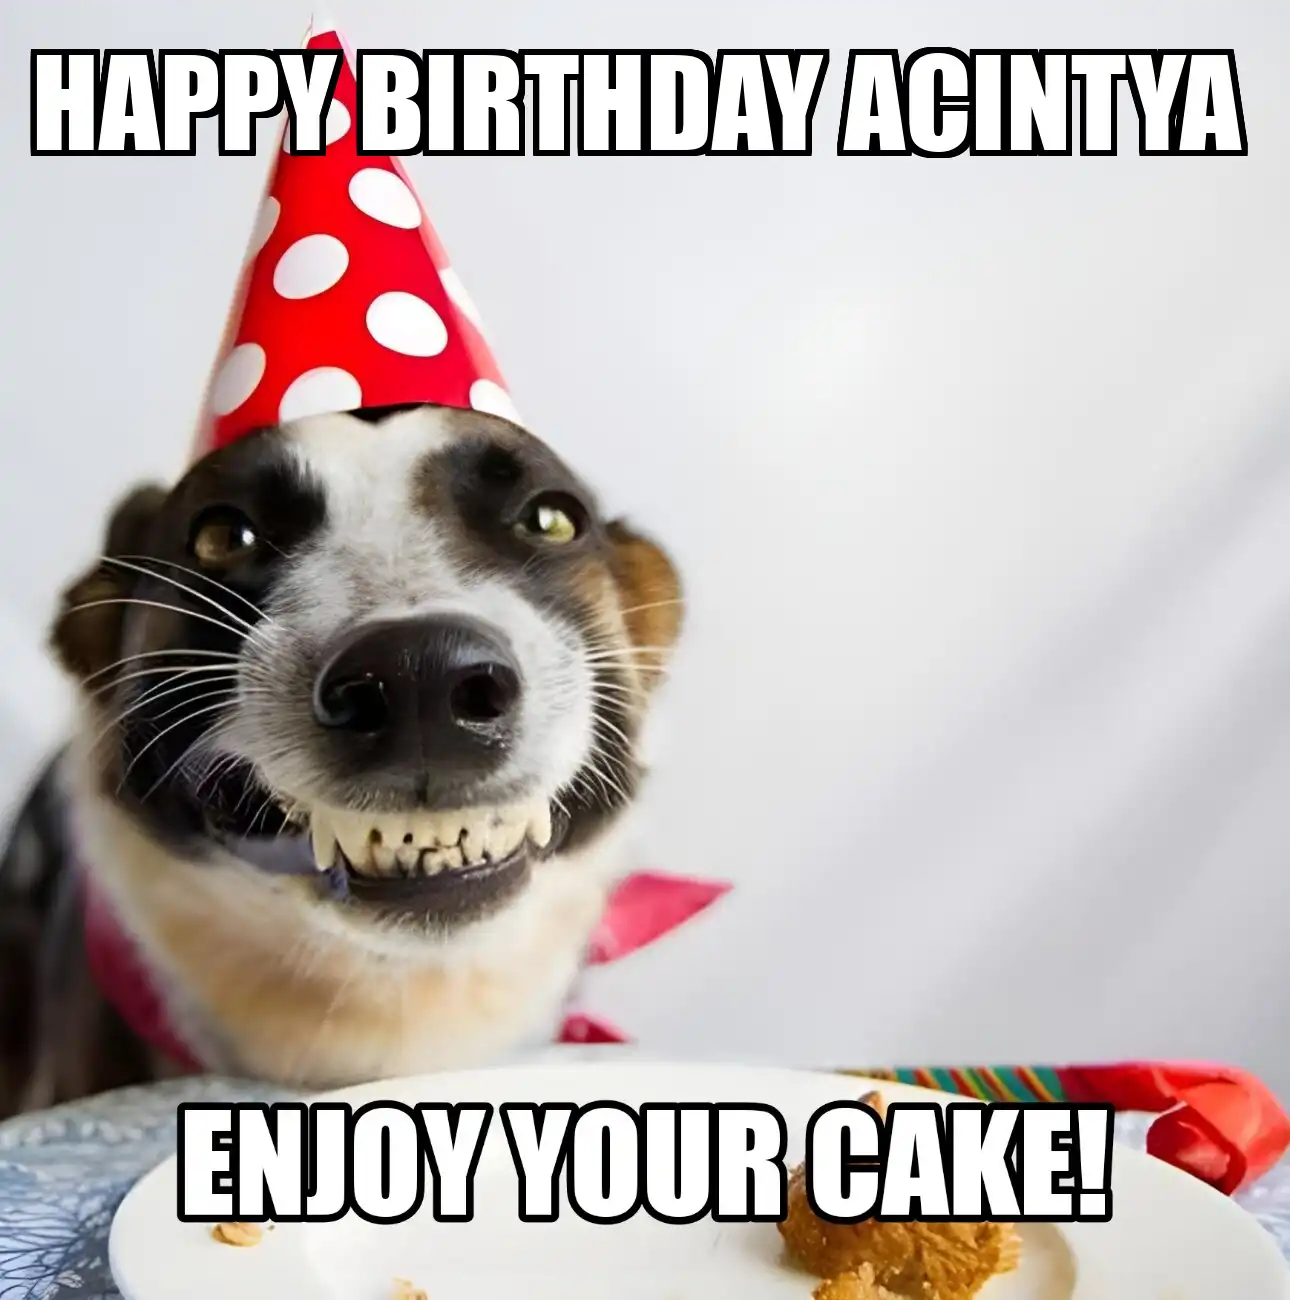 Happy Birthday Acintya Enjoy Your Cake Dog Meme